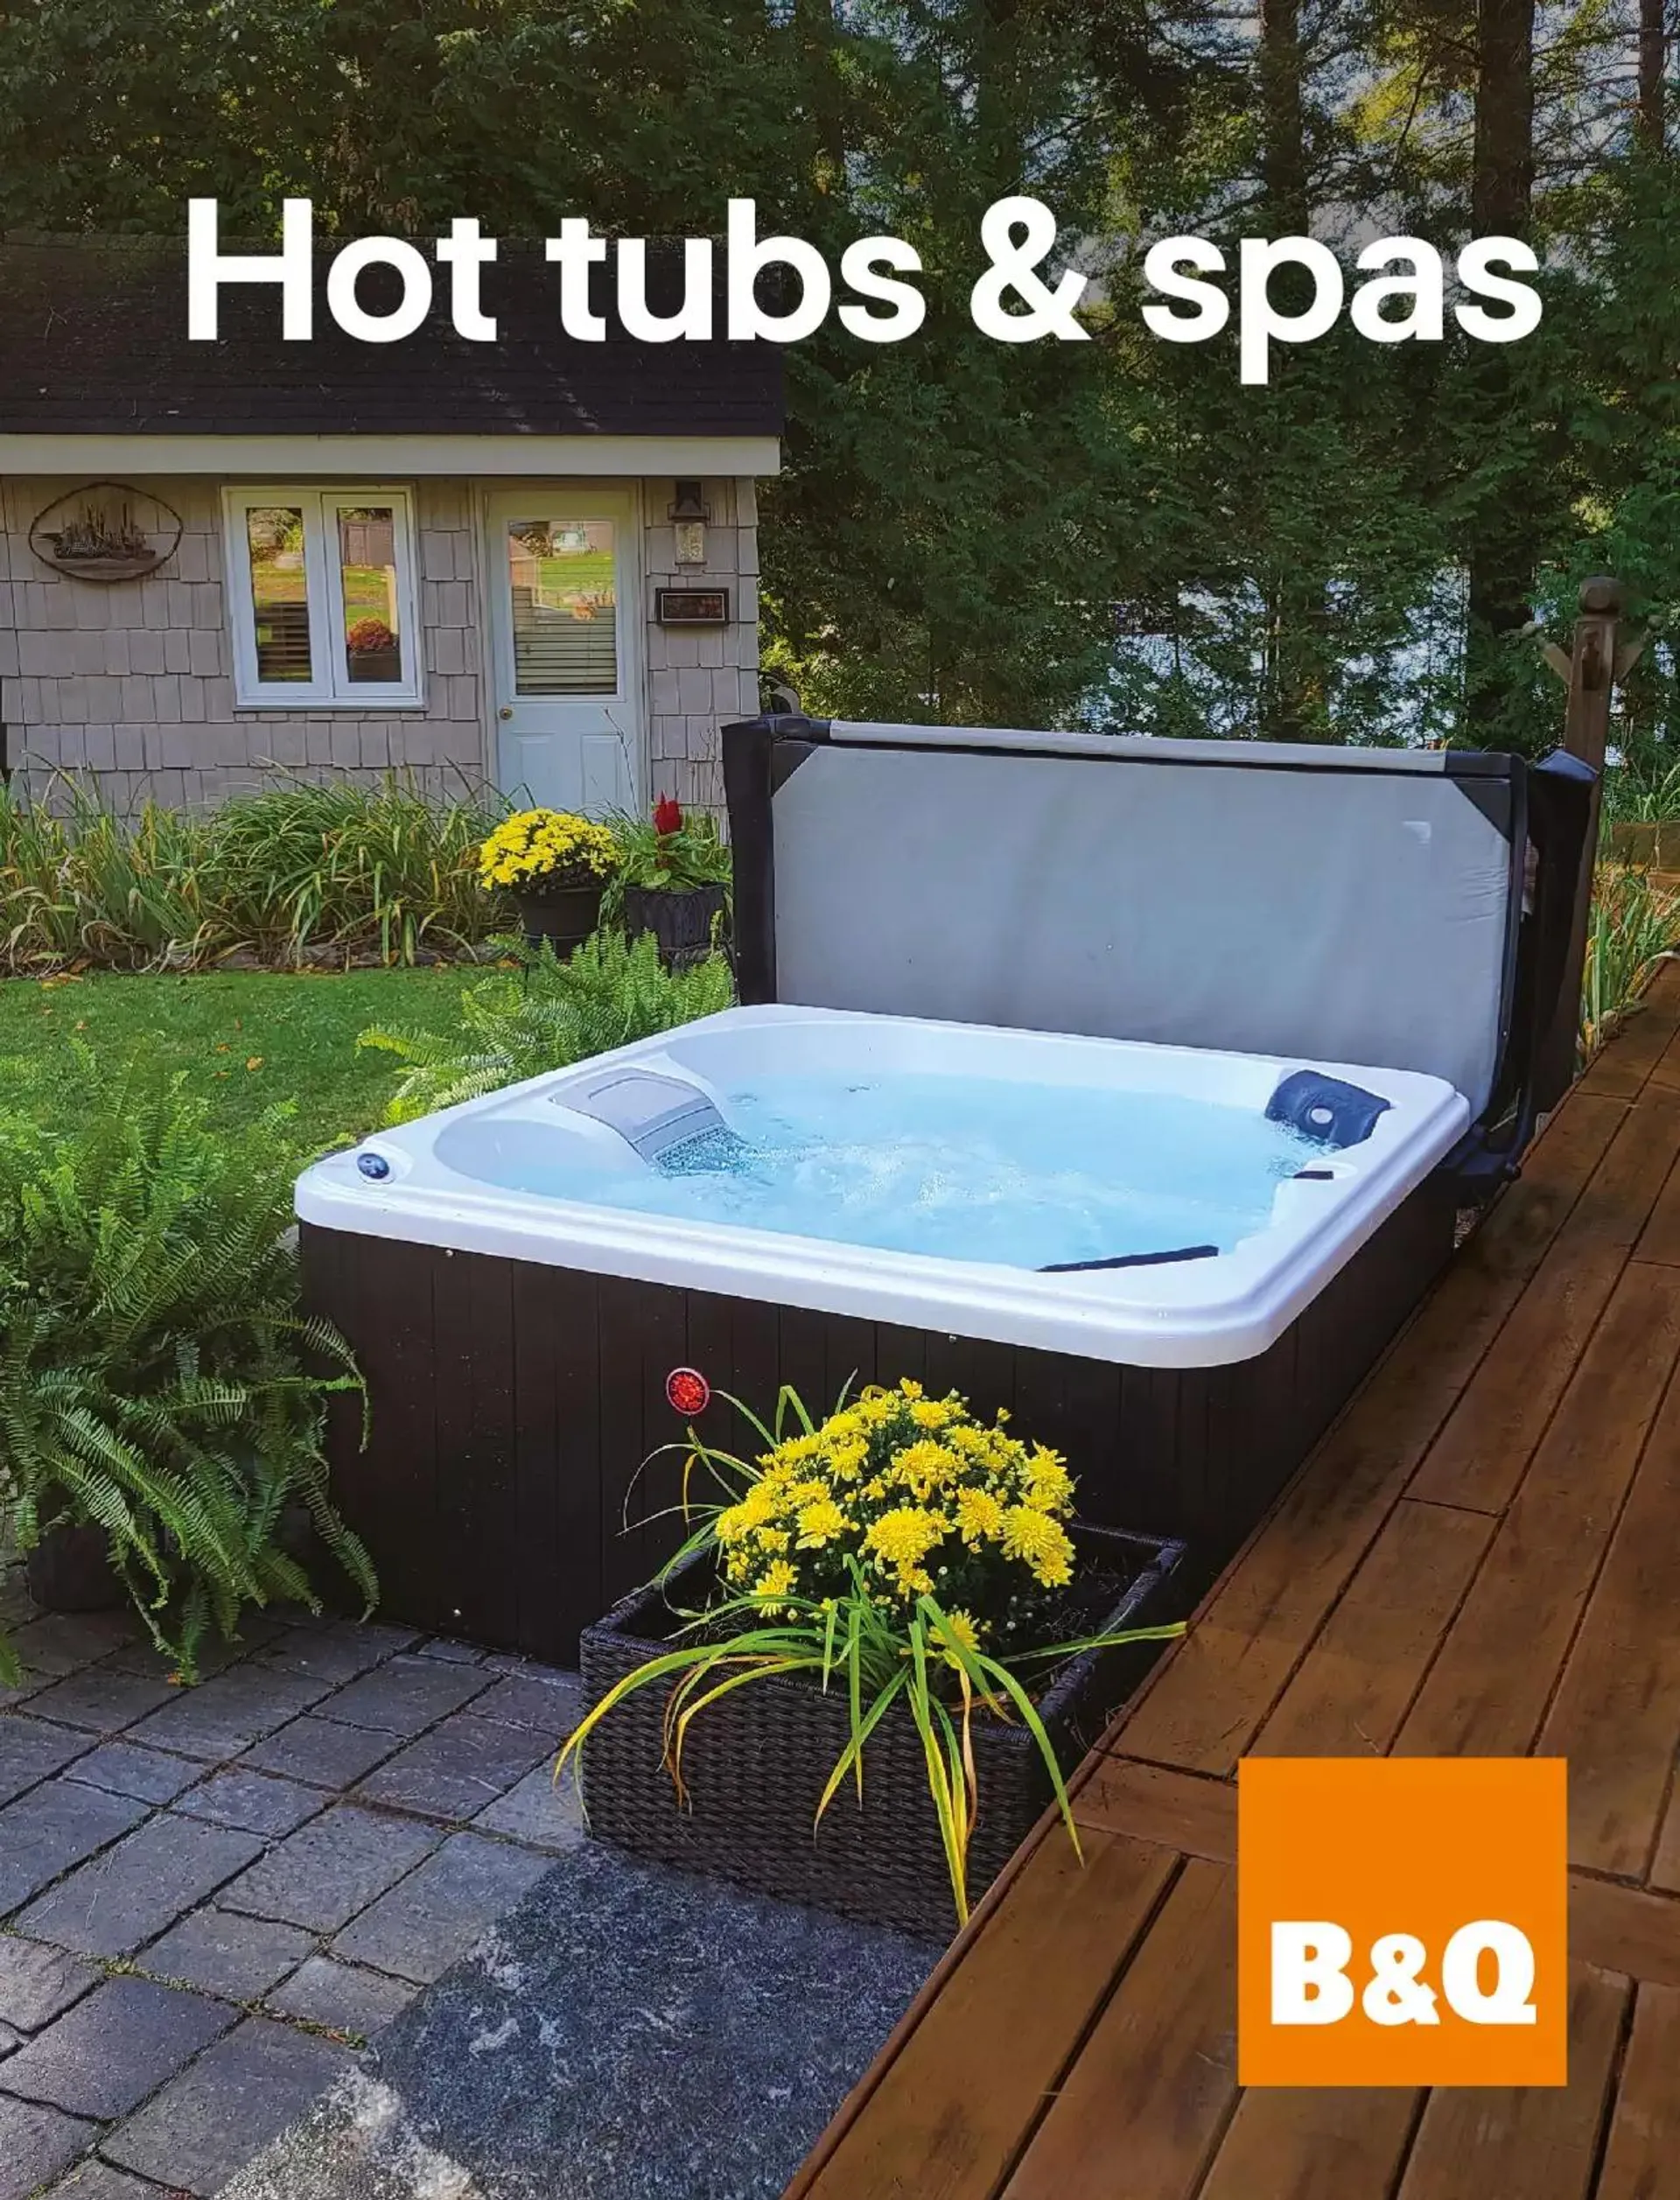 B&Q - Hot tub & spa collections